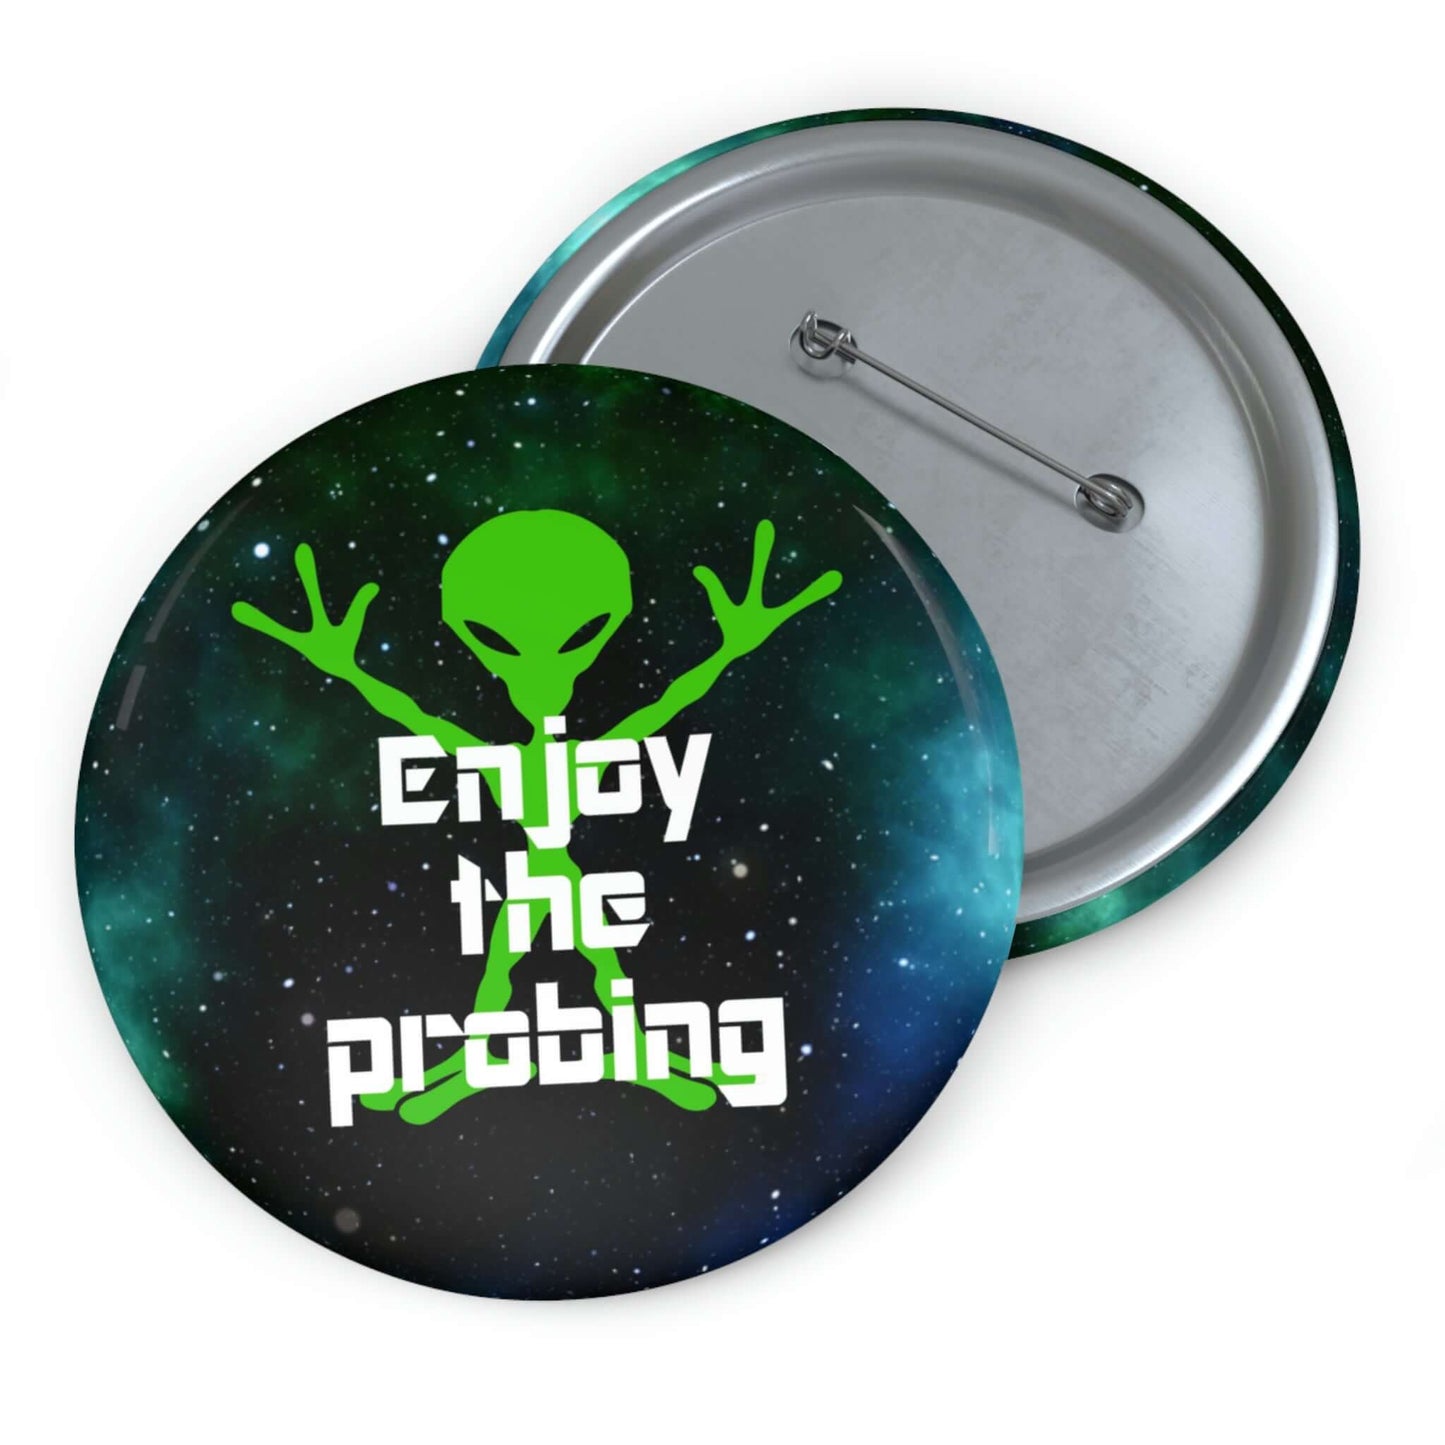 Enjoy the probing alien pinback button